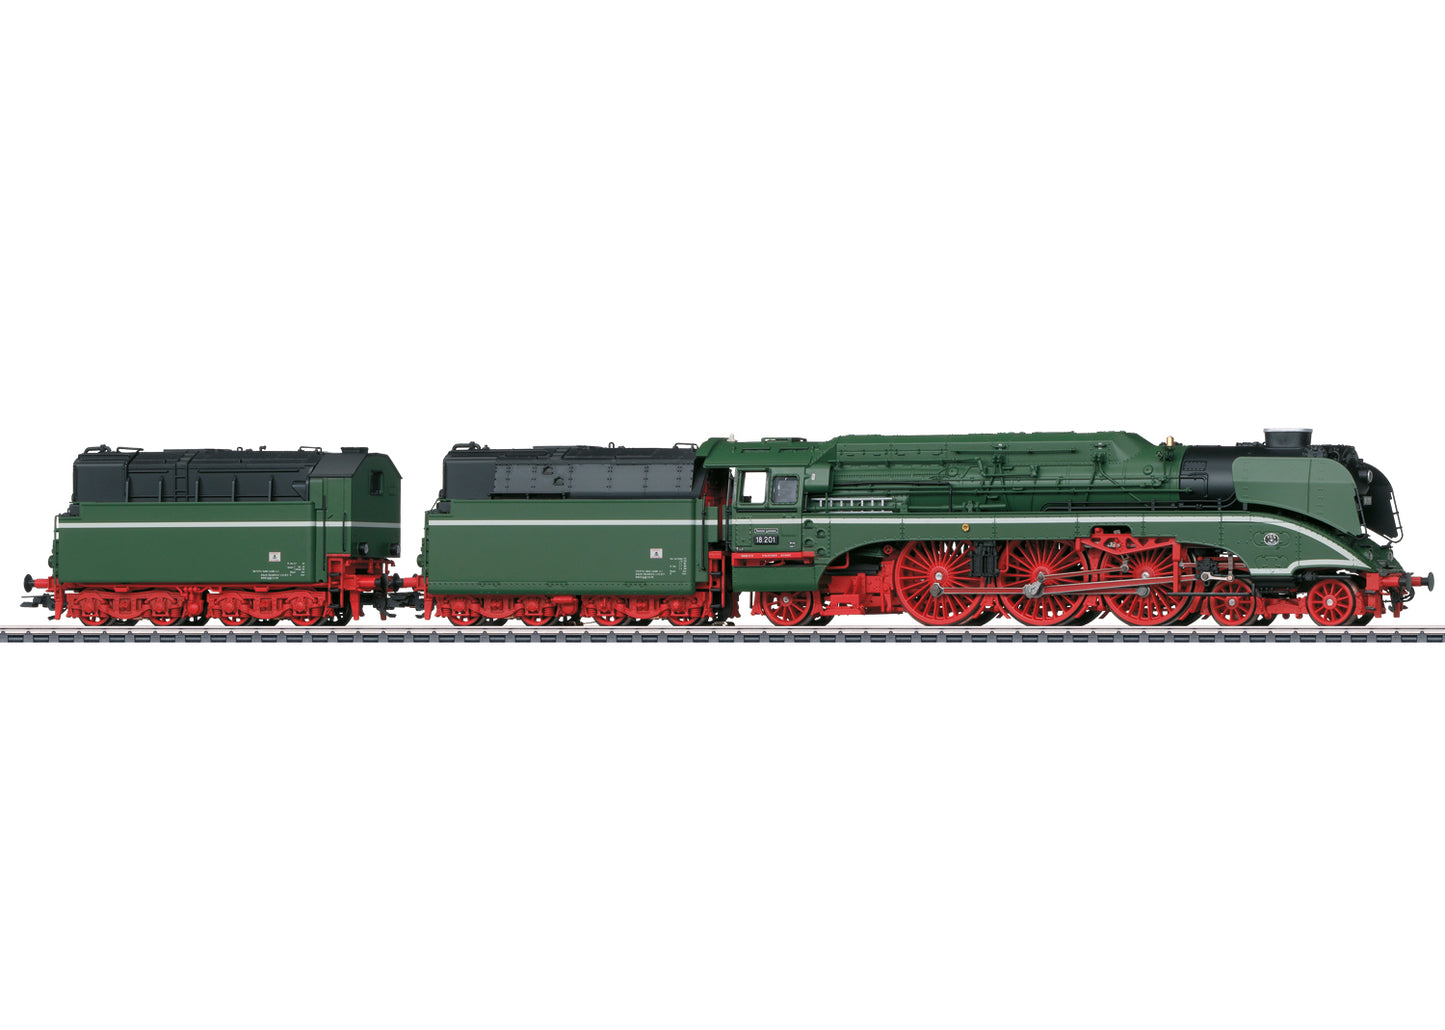 Marklin 38201 - Surprise Locomotive Steam Locomotive, Road Number 18 201